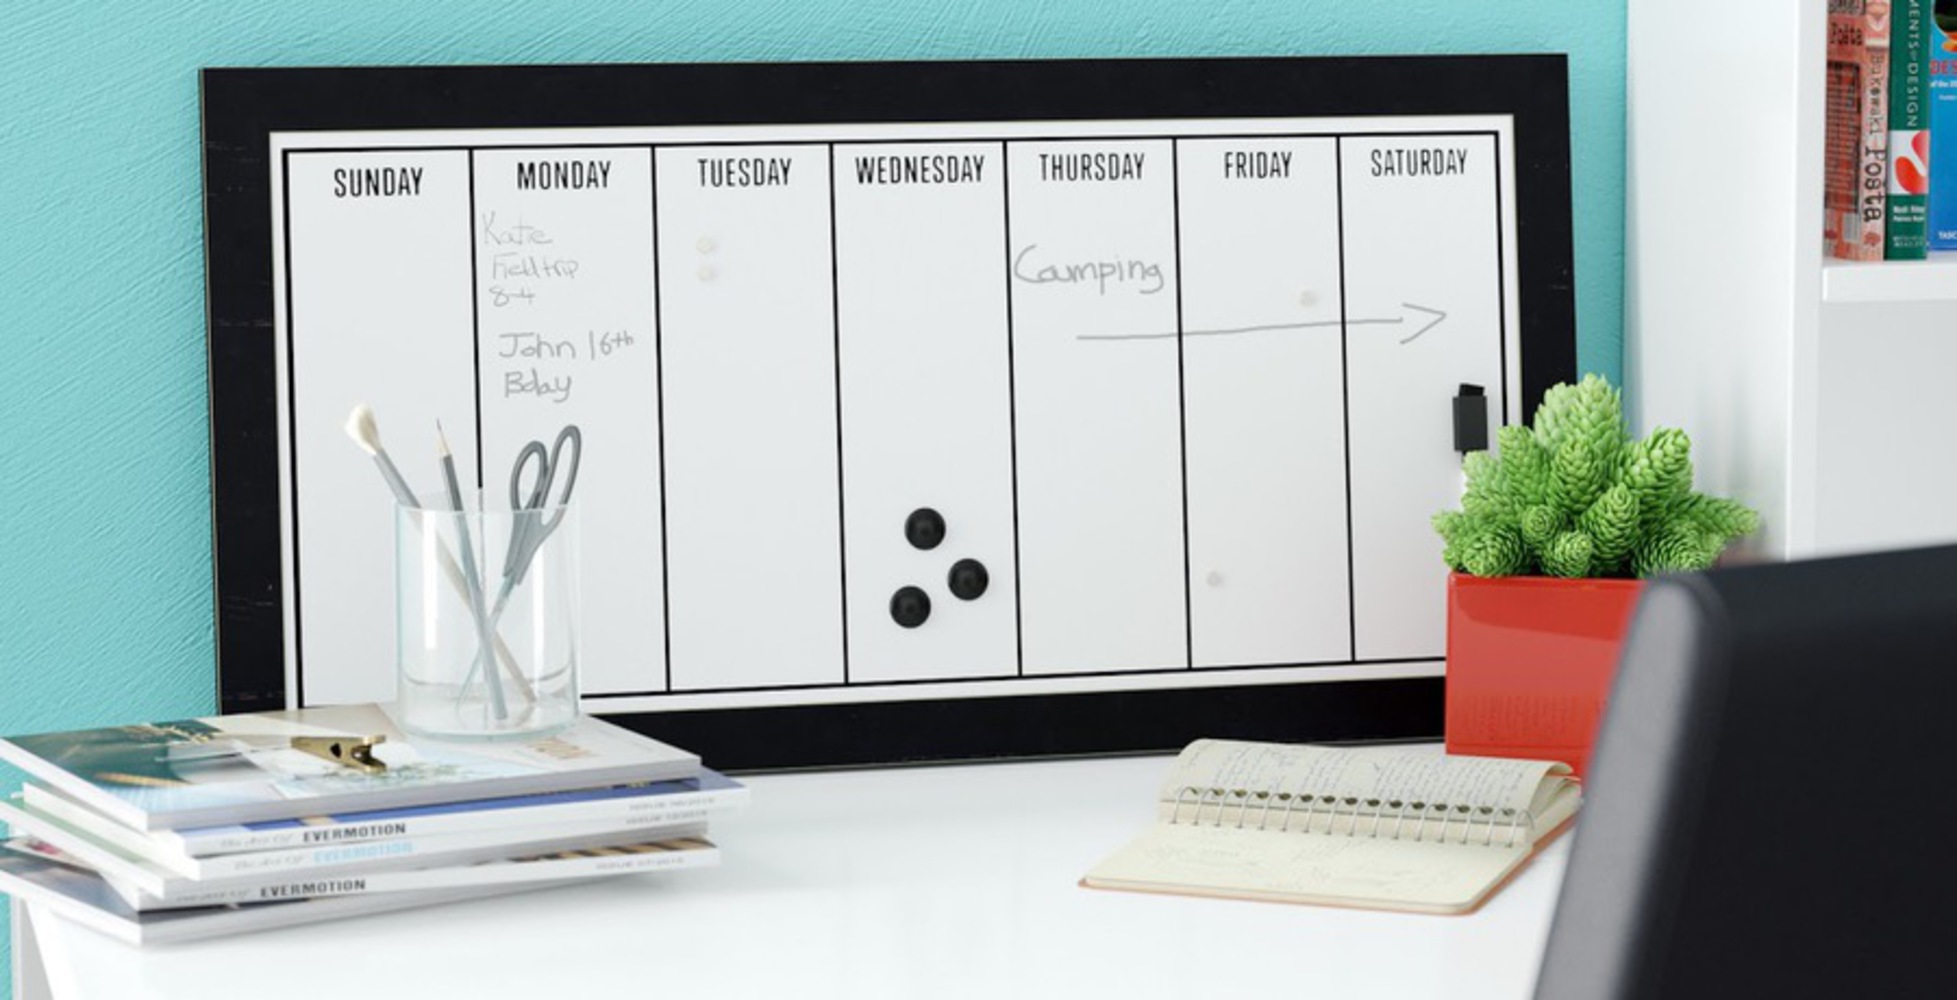 Weekly calendar magnetic dry erase board.thumb